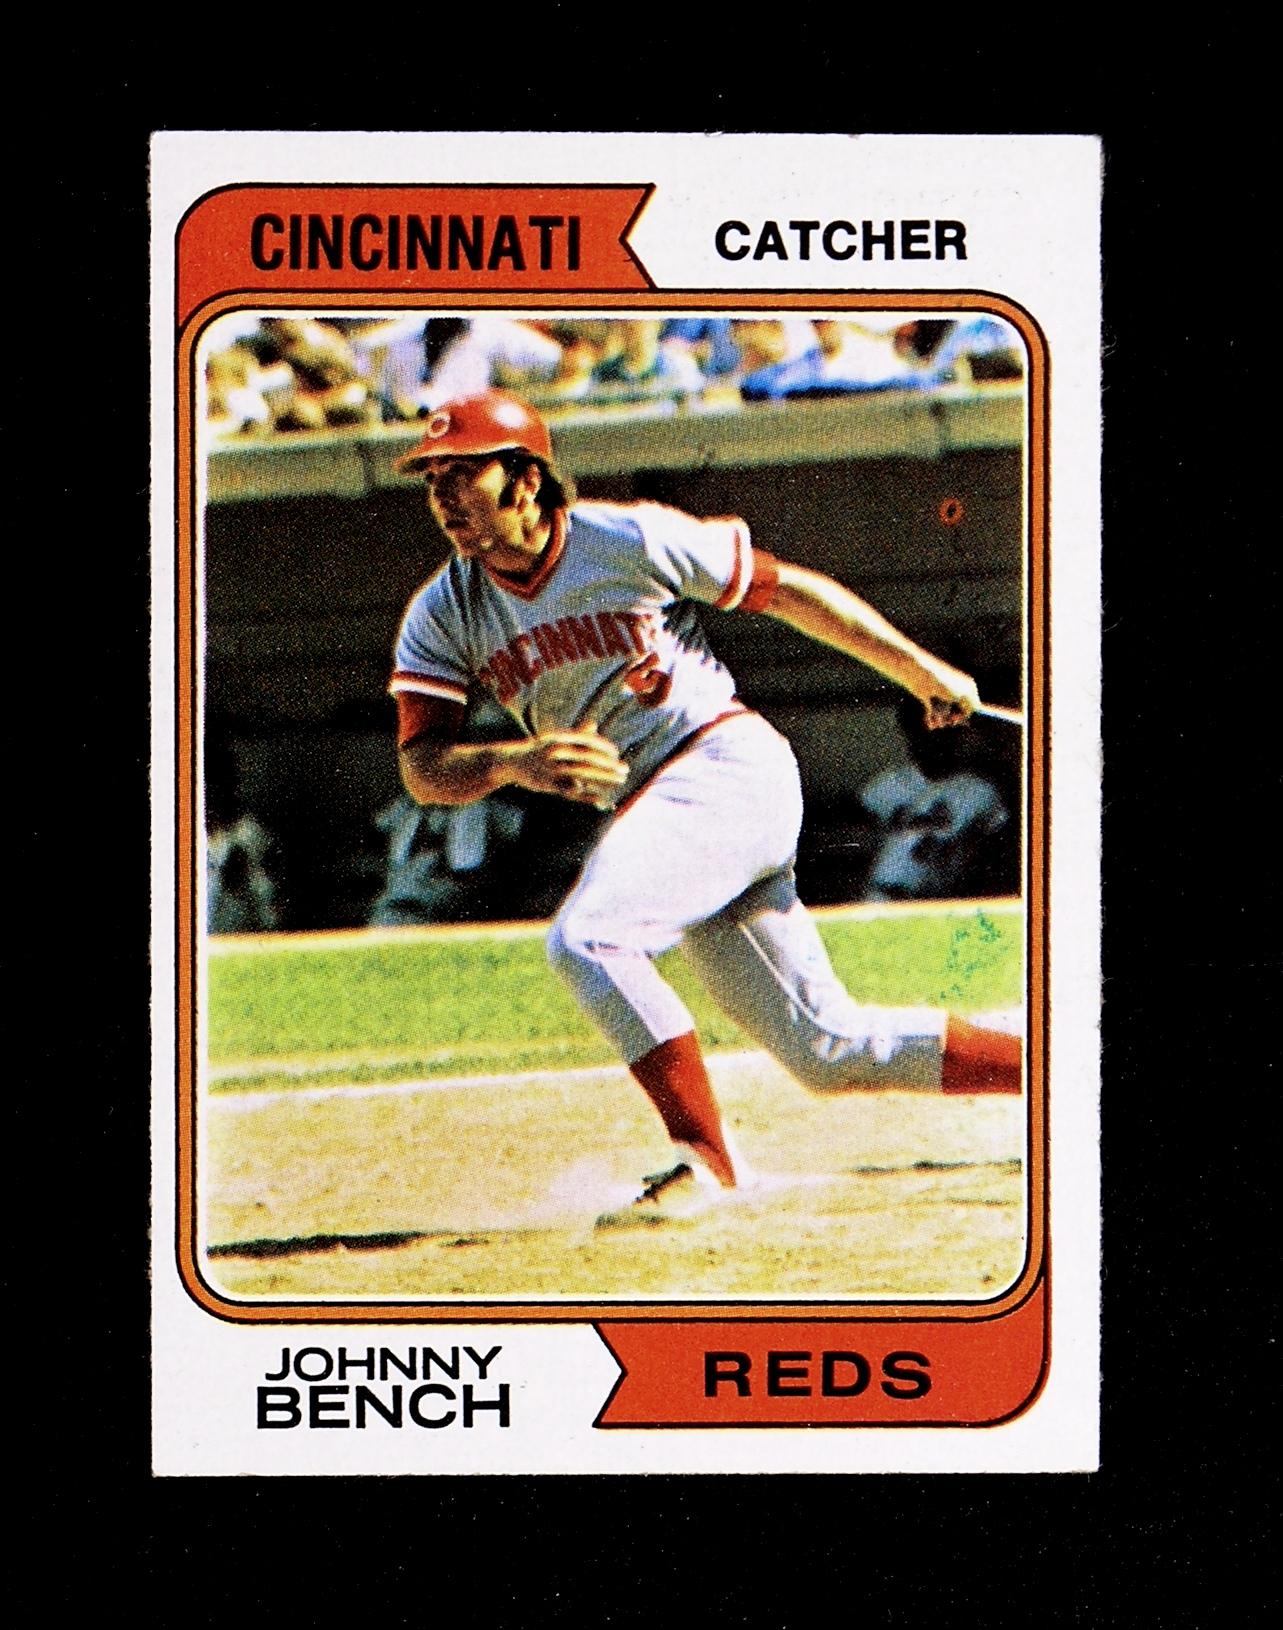 1974 Topps Baseball Card #10 Hall of Famer Johnny Bench Cincinnati Reds